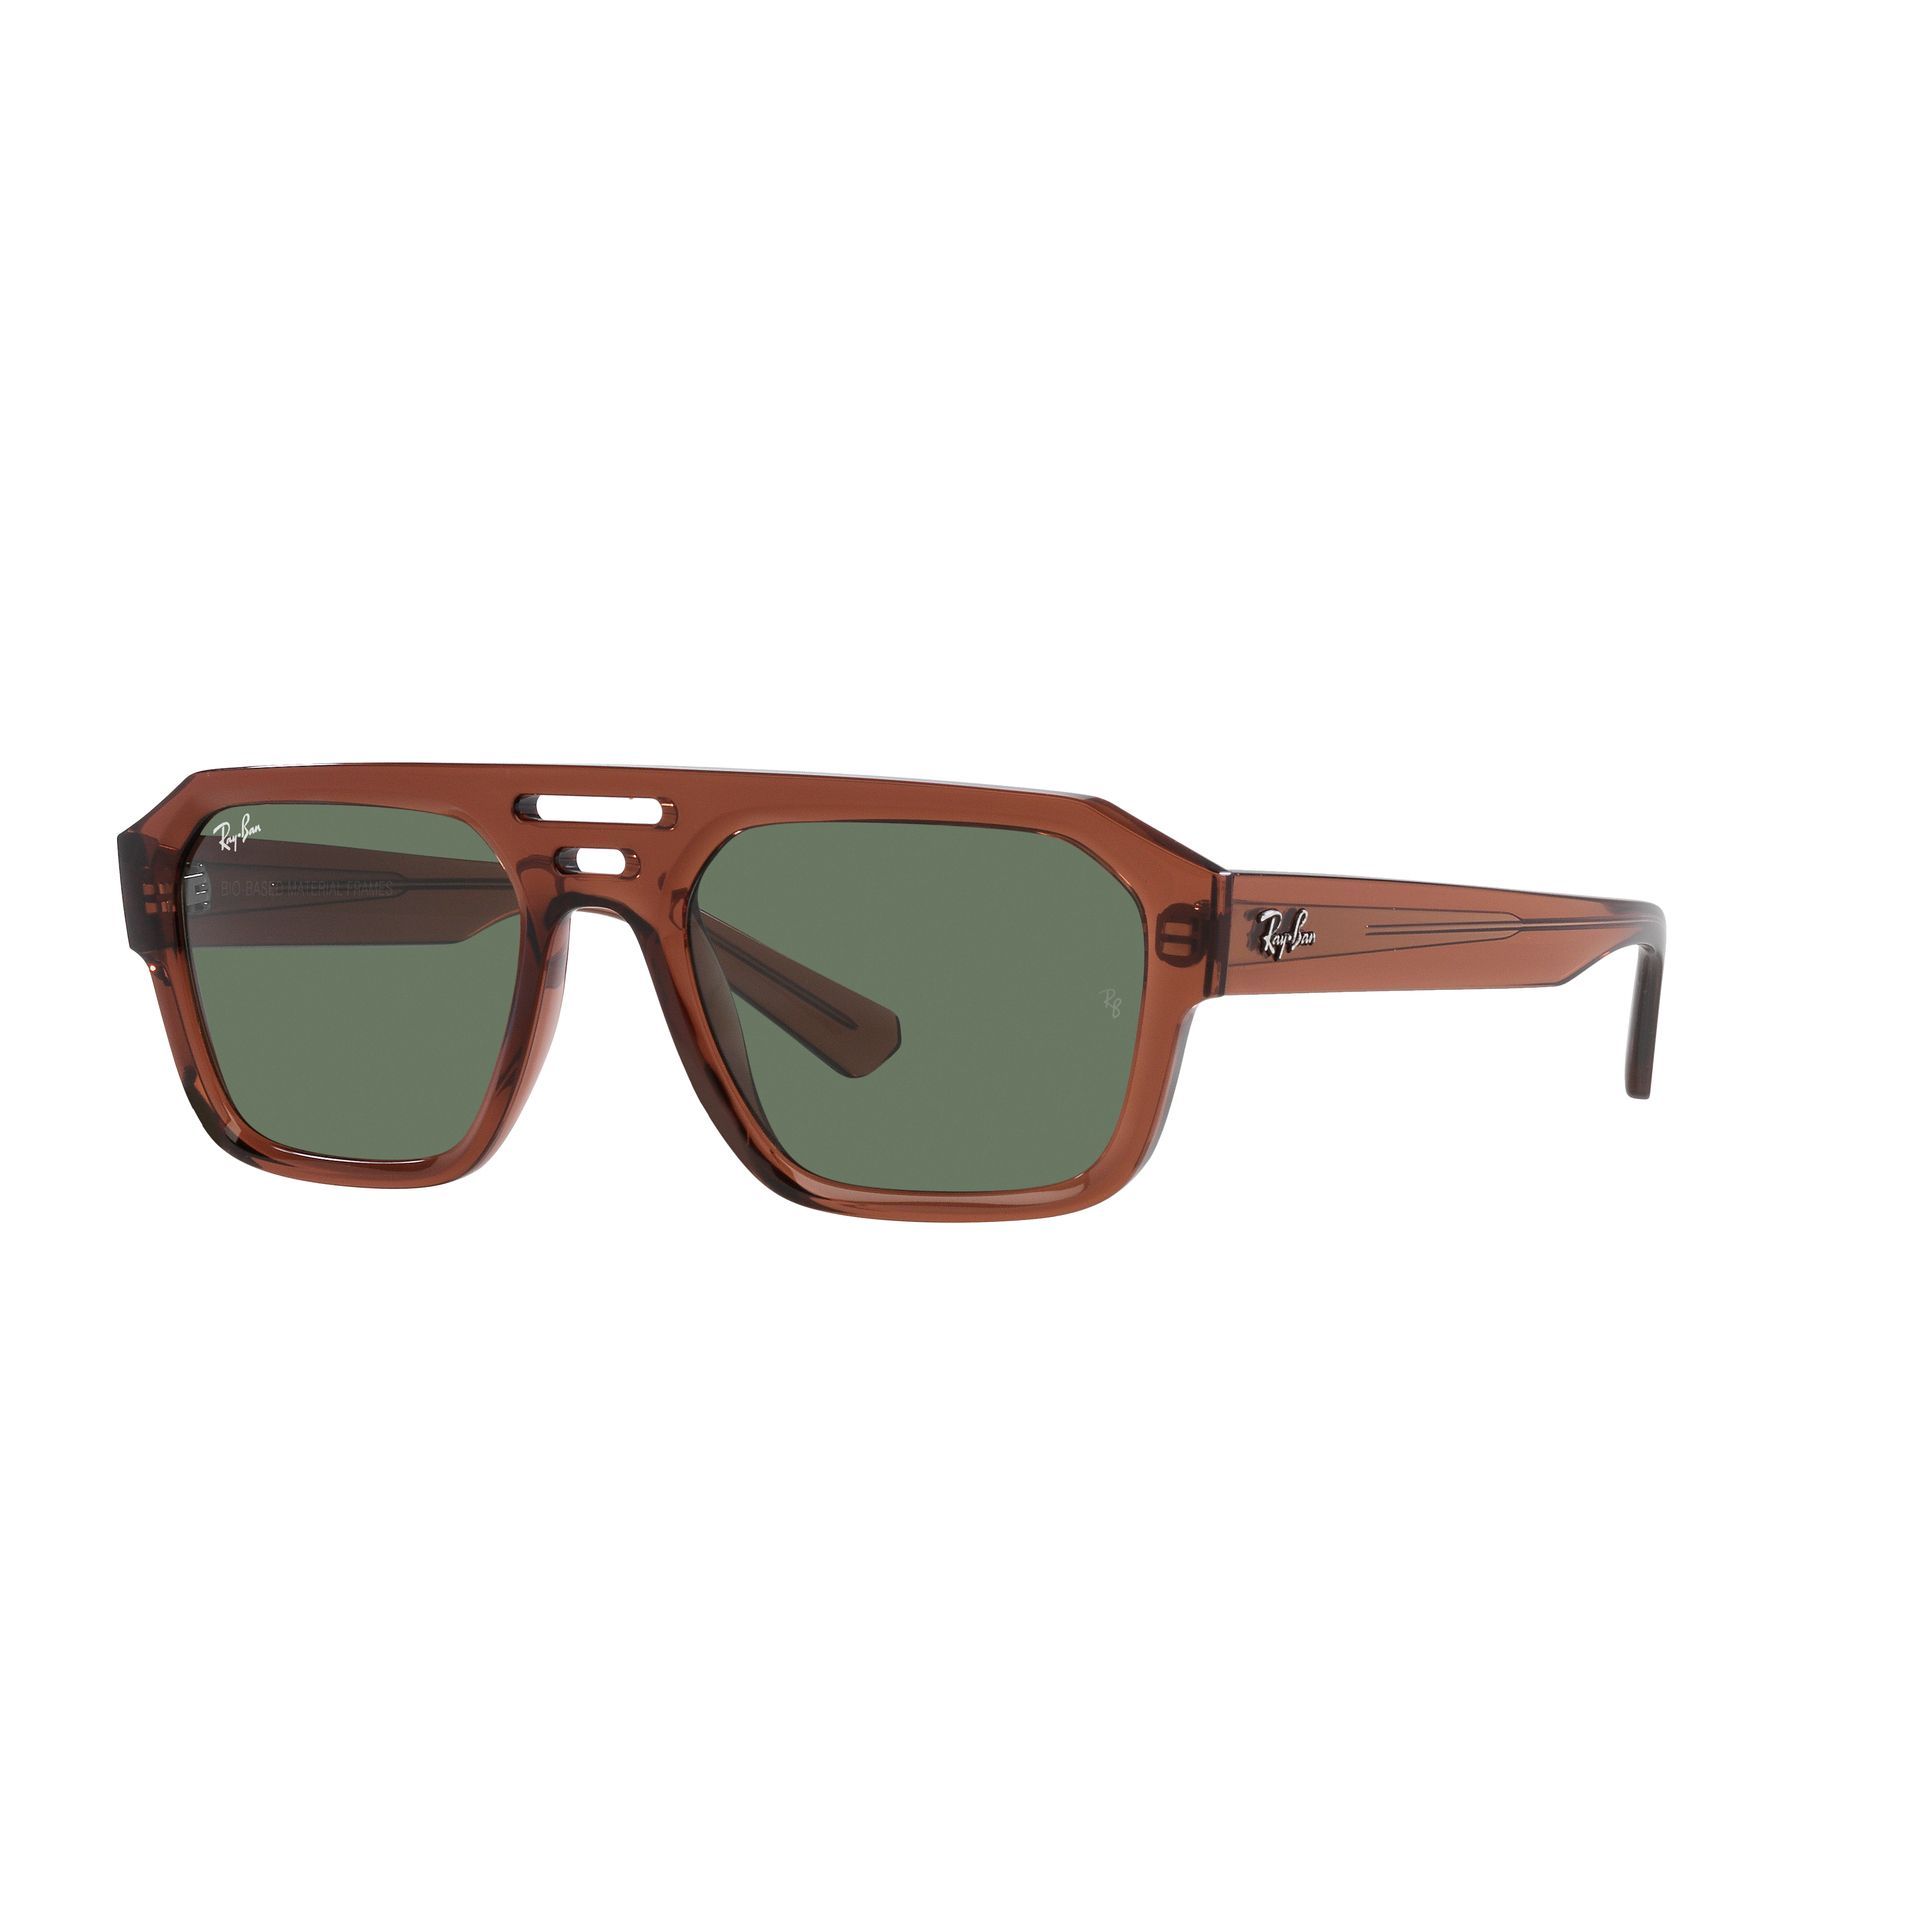 0RB4397 Irregular Sunglasses 667882 - size 54